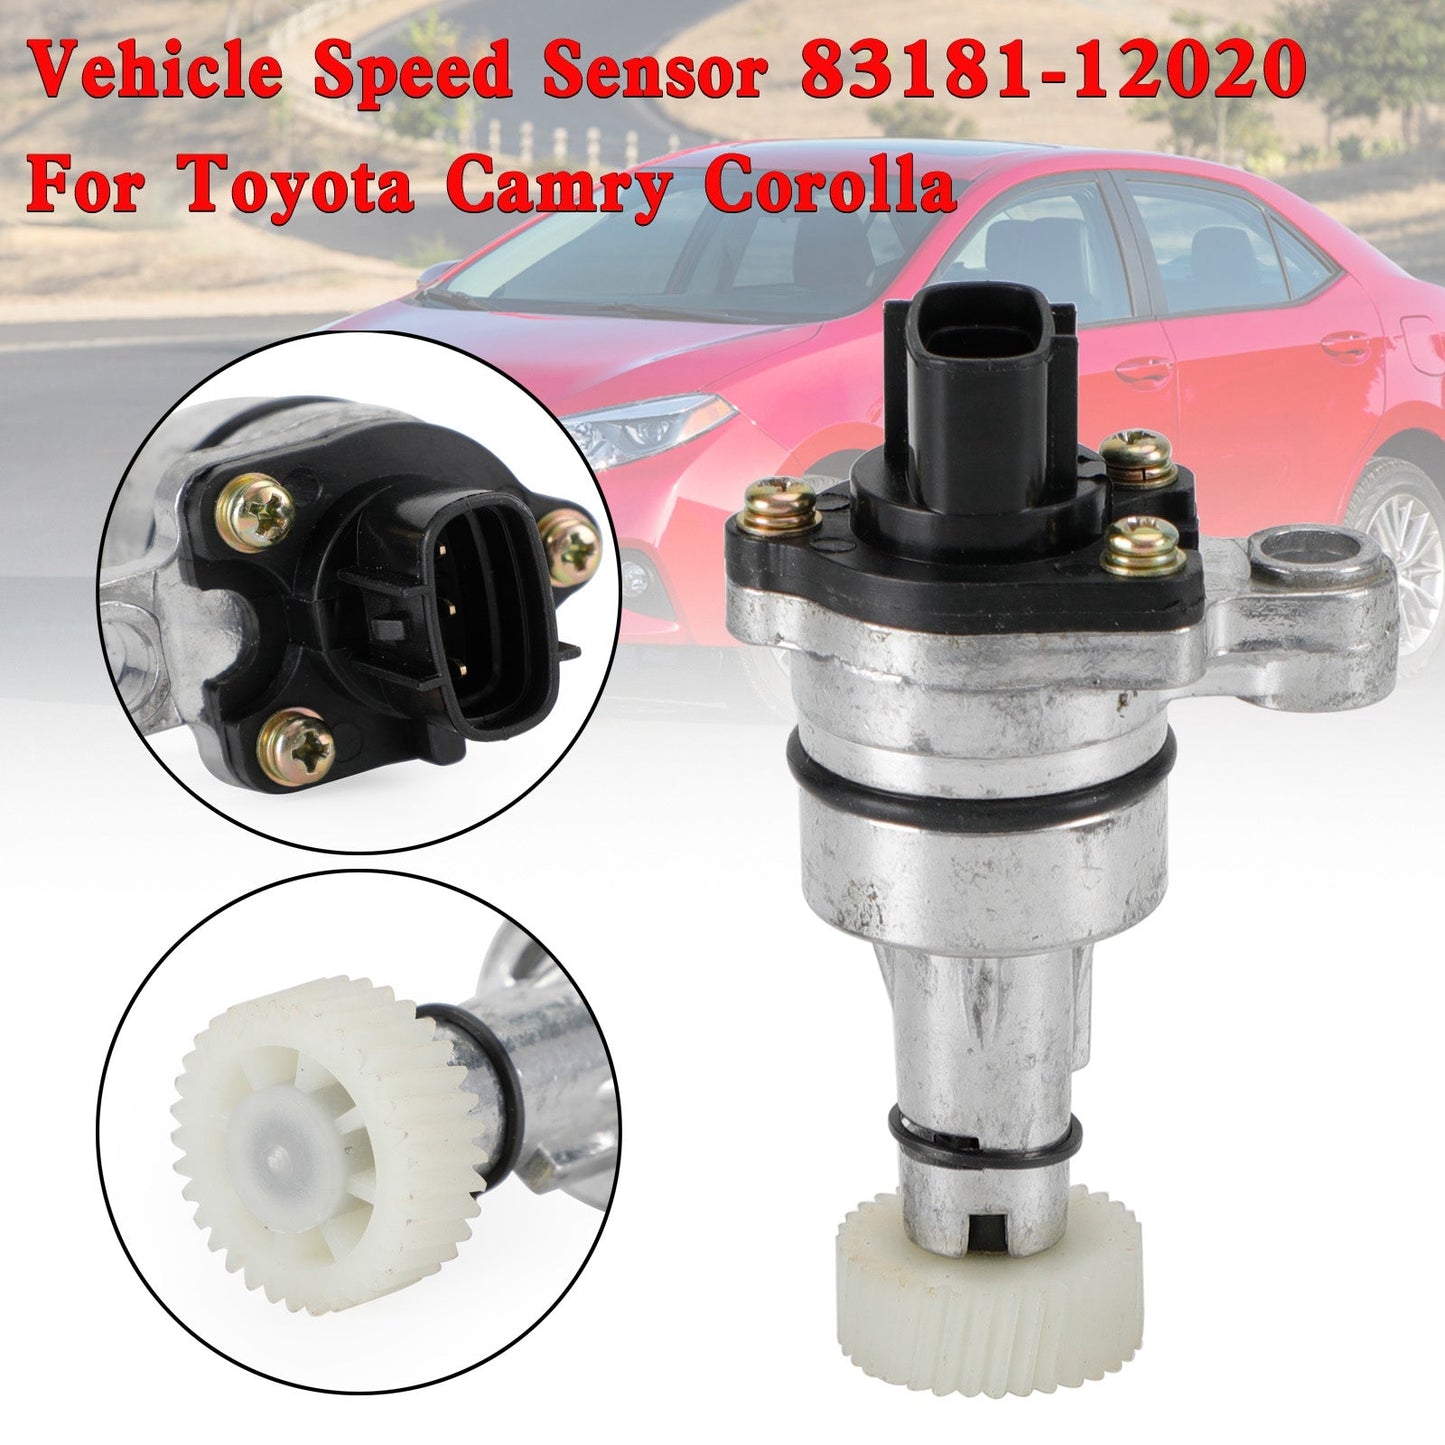 Vehicle Speed Sensor 83181-12020 For Toyota Camry Corolla